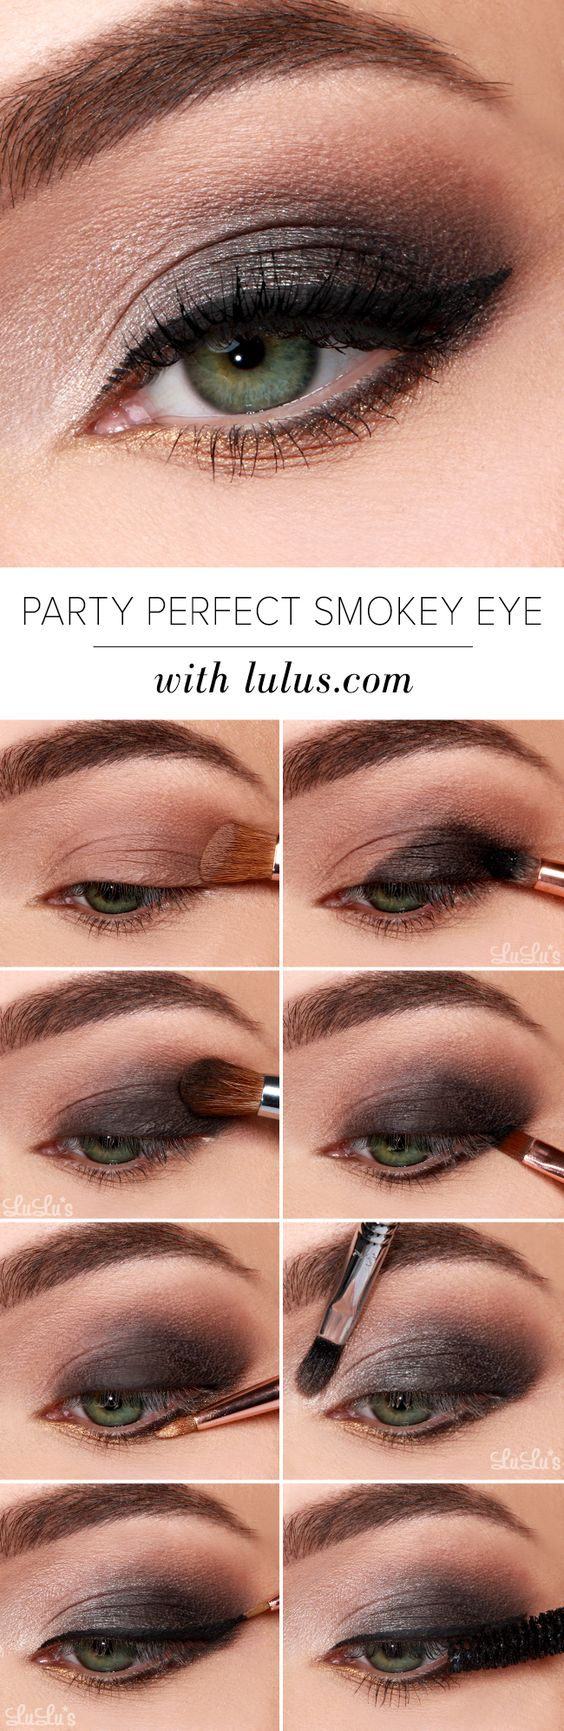 Dark Eye Makeup 40 Hottest Smokey Eye Makeup Ideas 2019 Smokey Eye Tutorials For